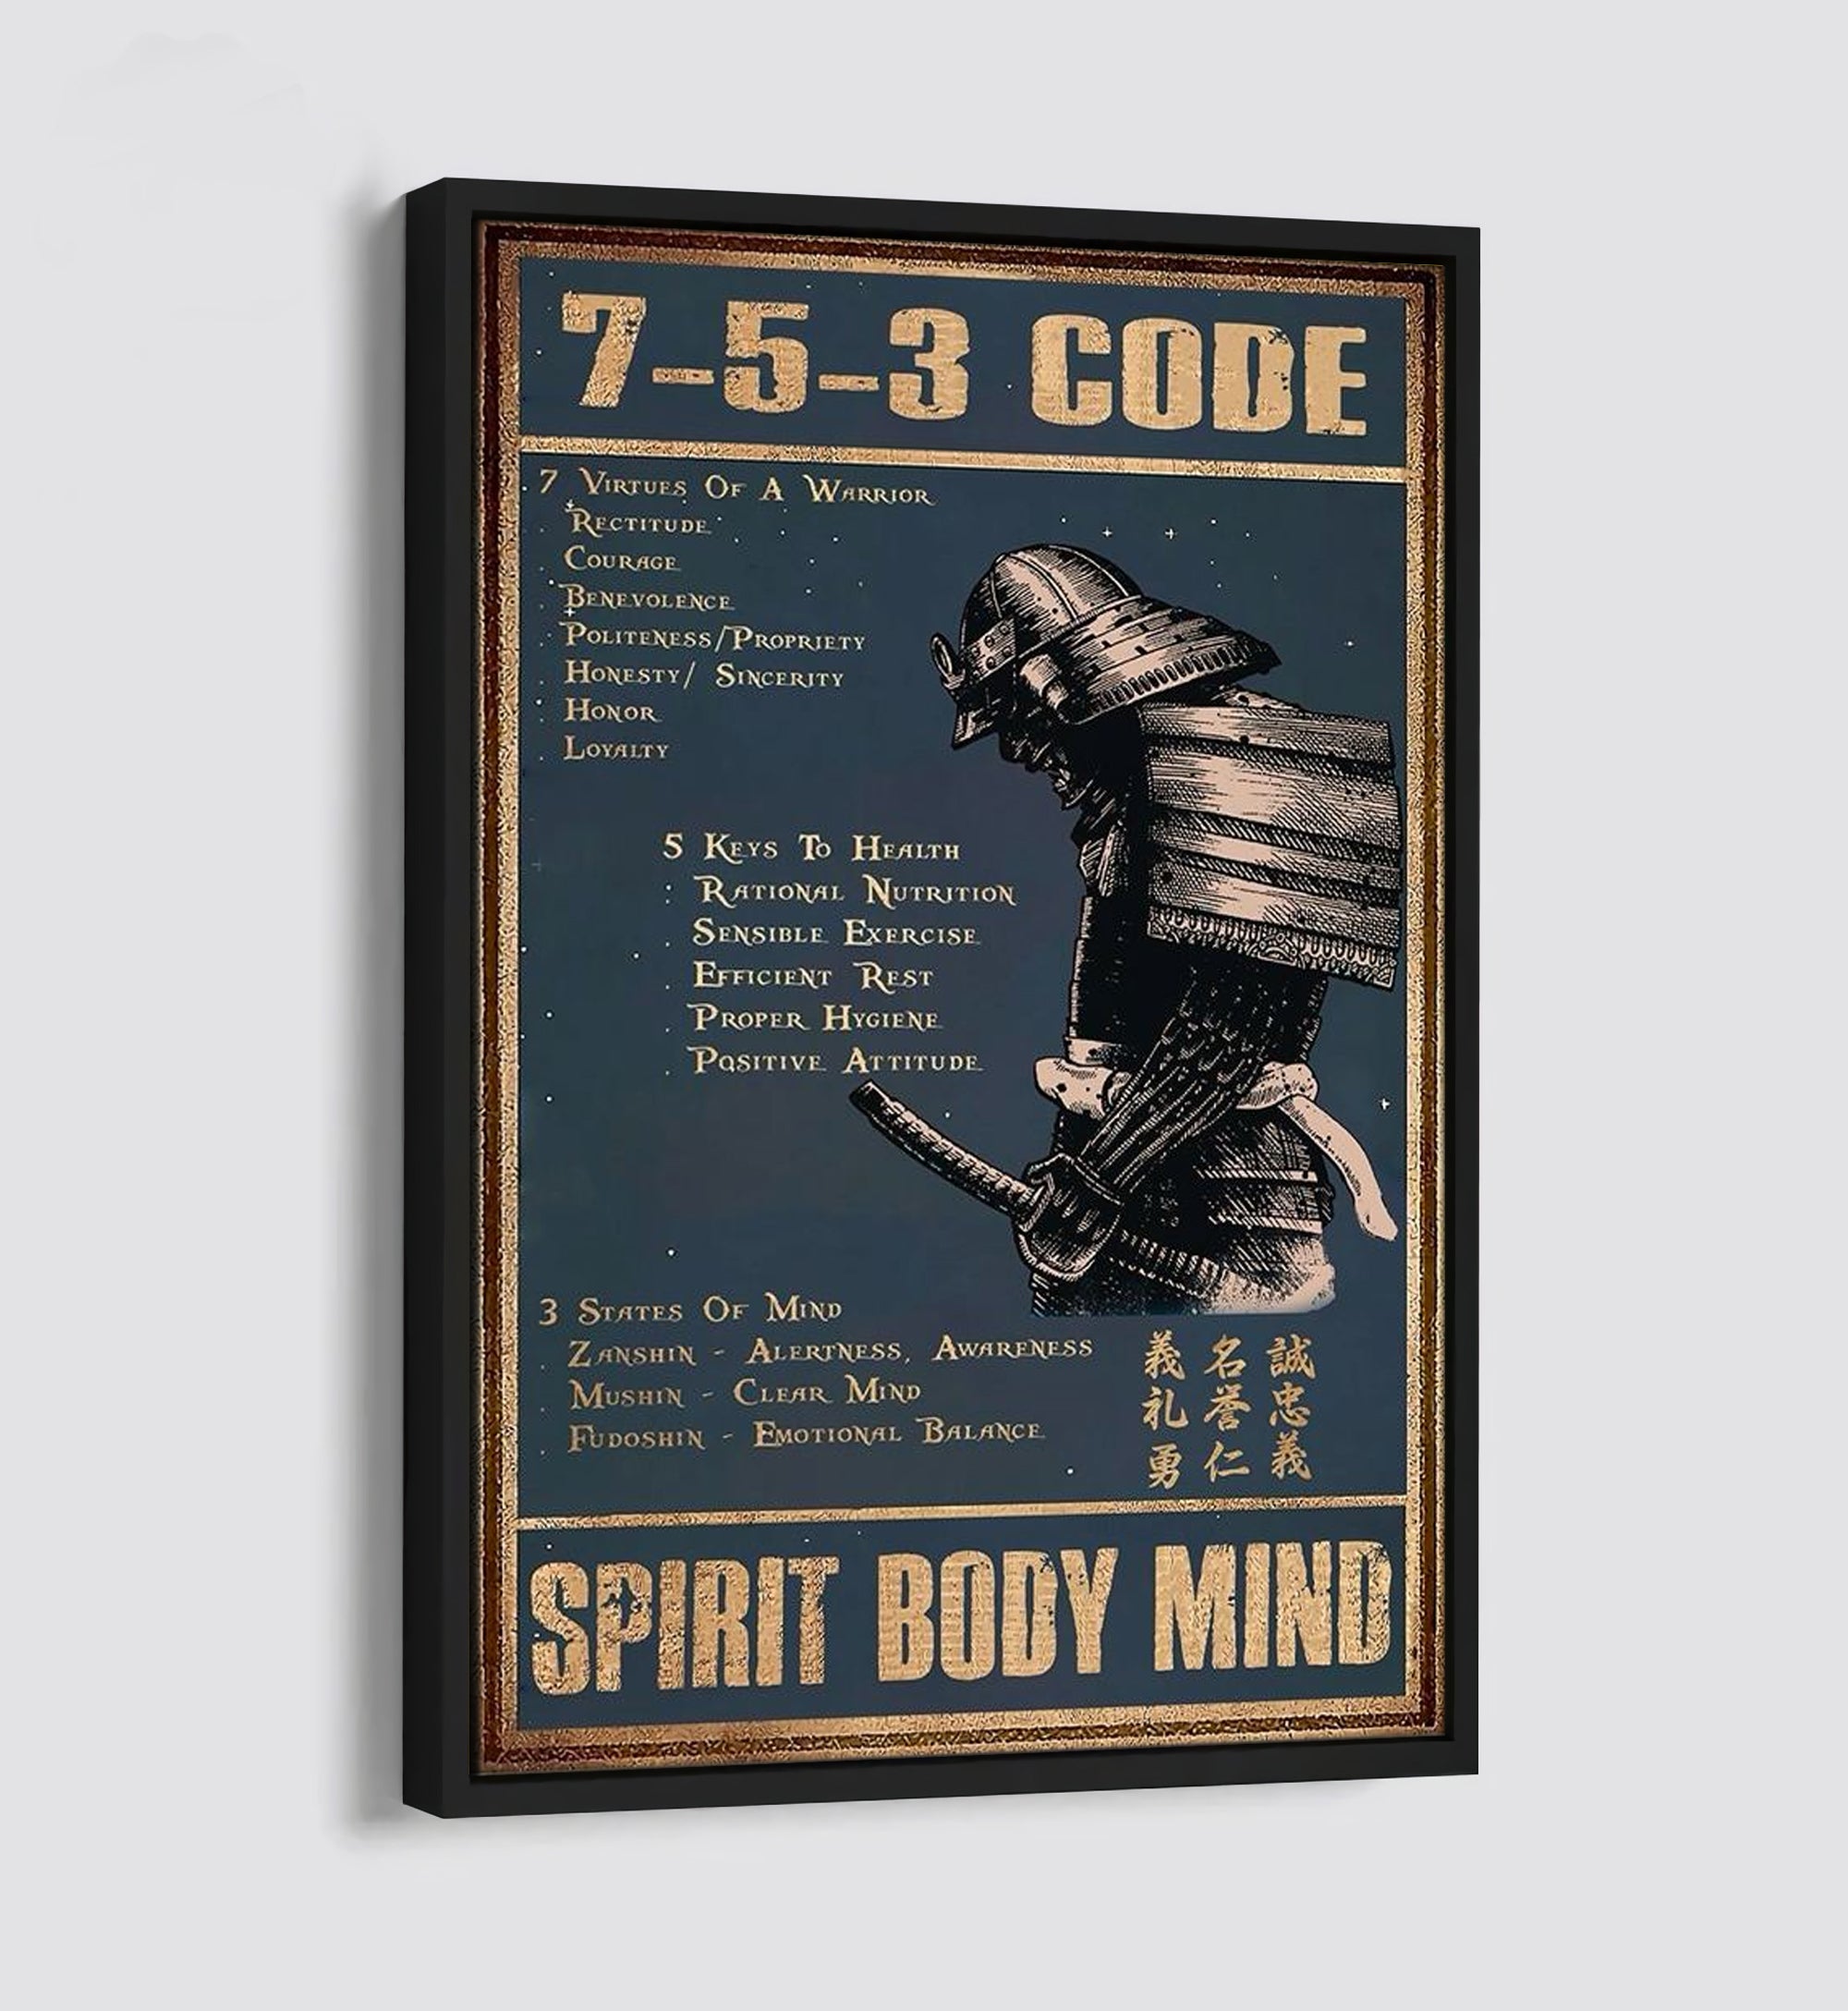 Samurai 7 5 3 Code- Spirit body mind